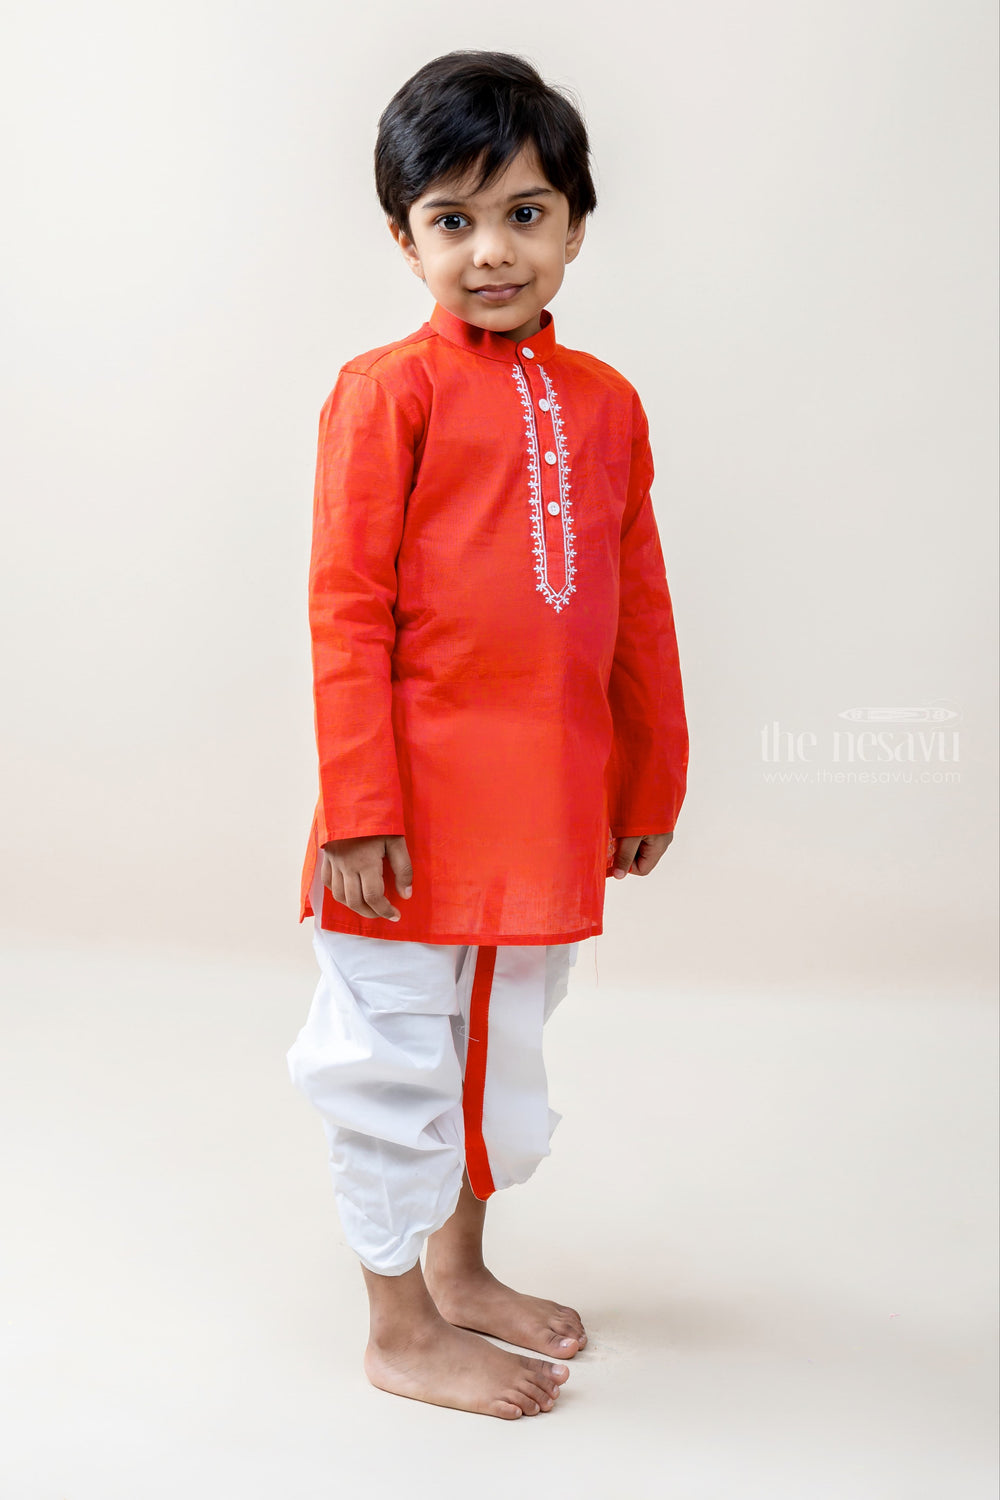 The Nesavu Ethnic Sets Little Champ - Vibrant Maroon Kurta With White Panchkajam For Little Boys psr silks Nesavu